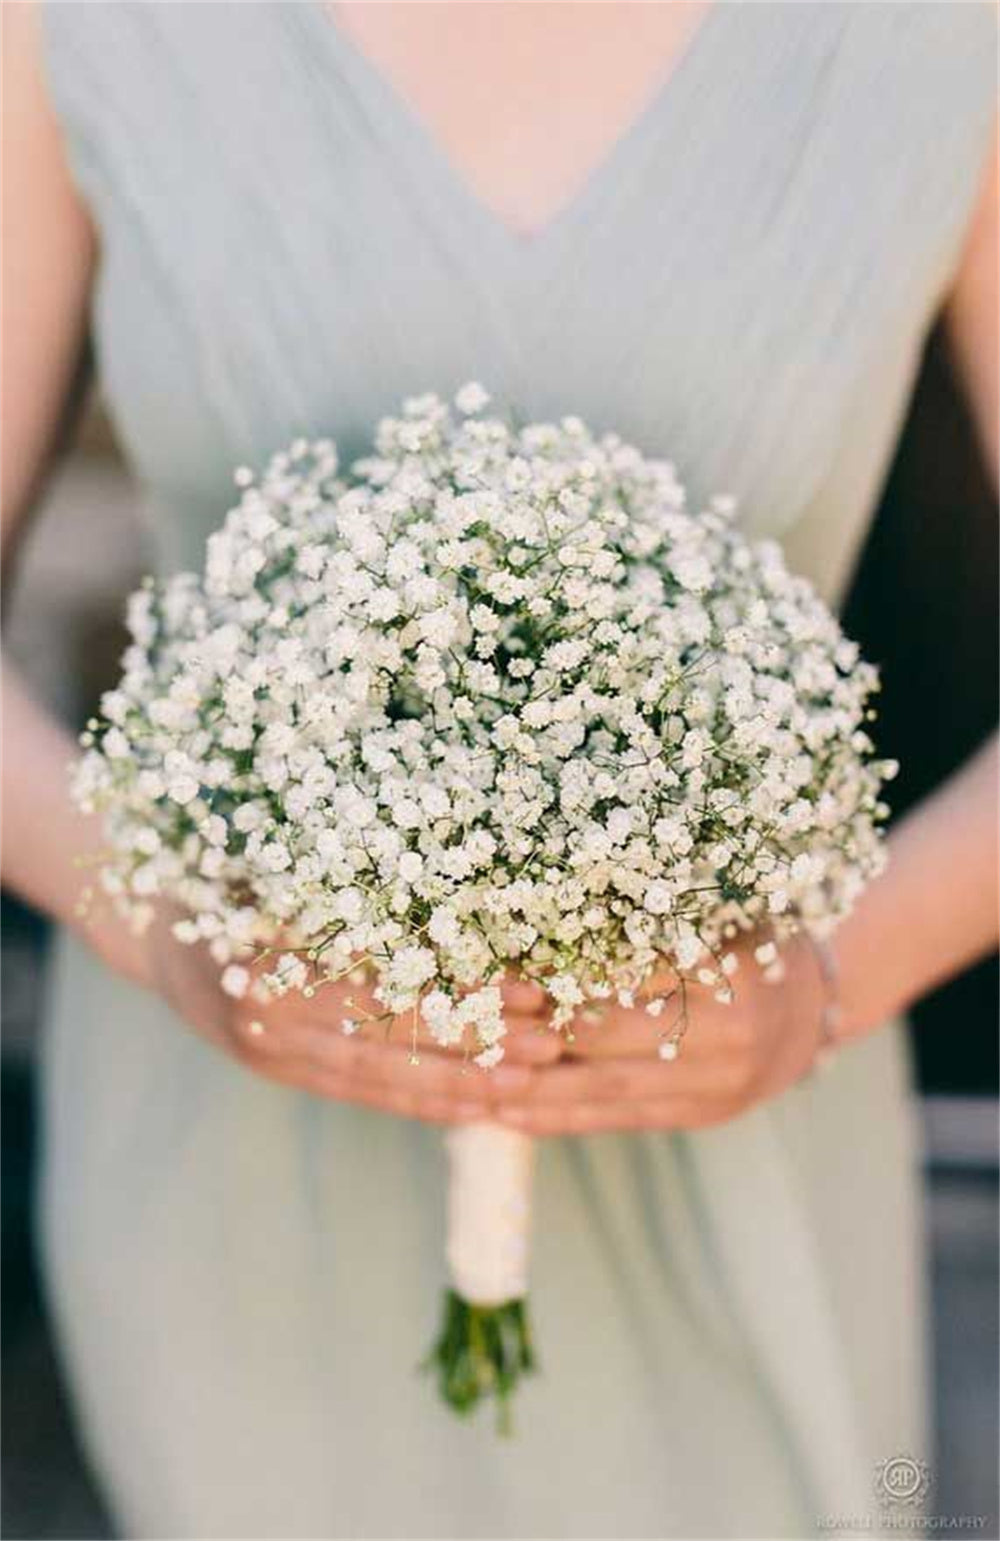 Simple Baby's Breath Wedding Bouquet for Spring Wedding